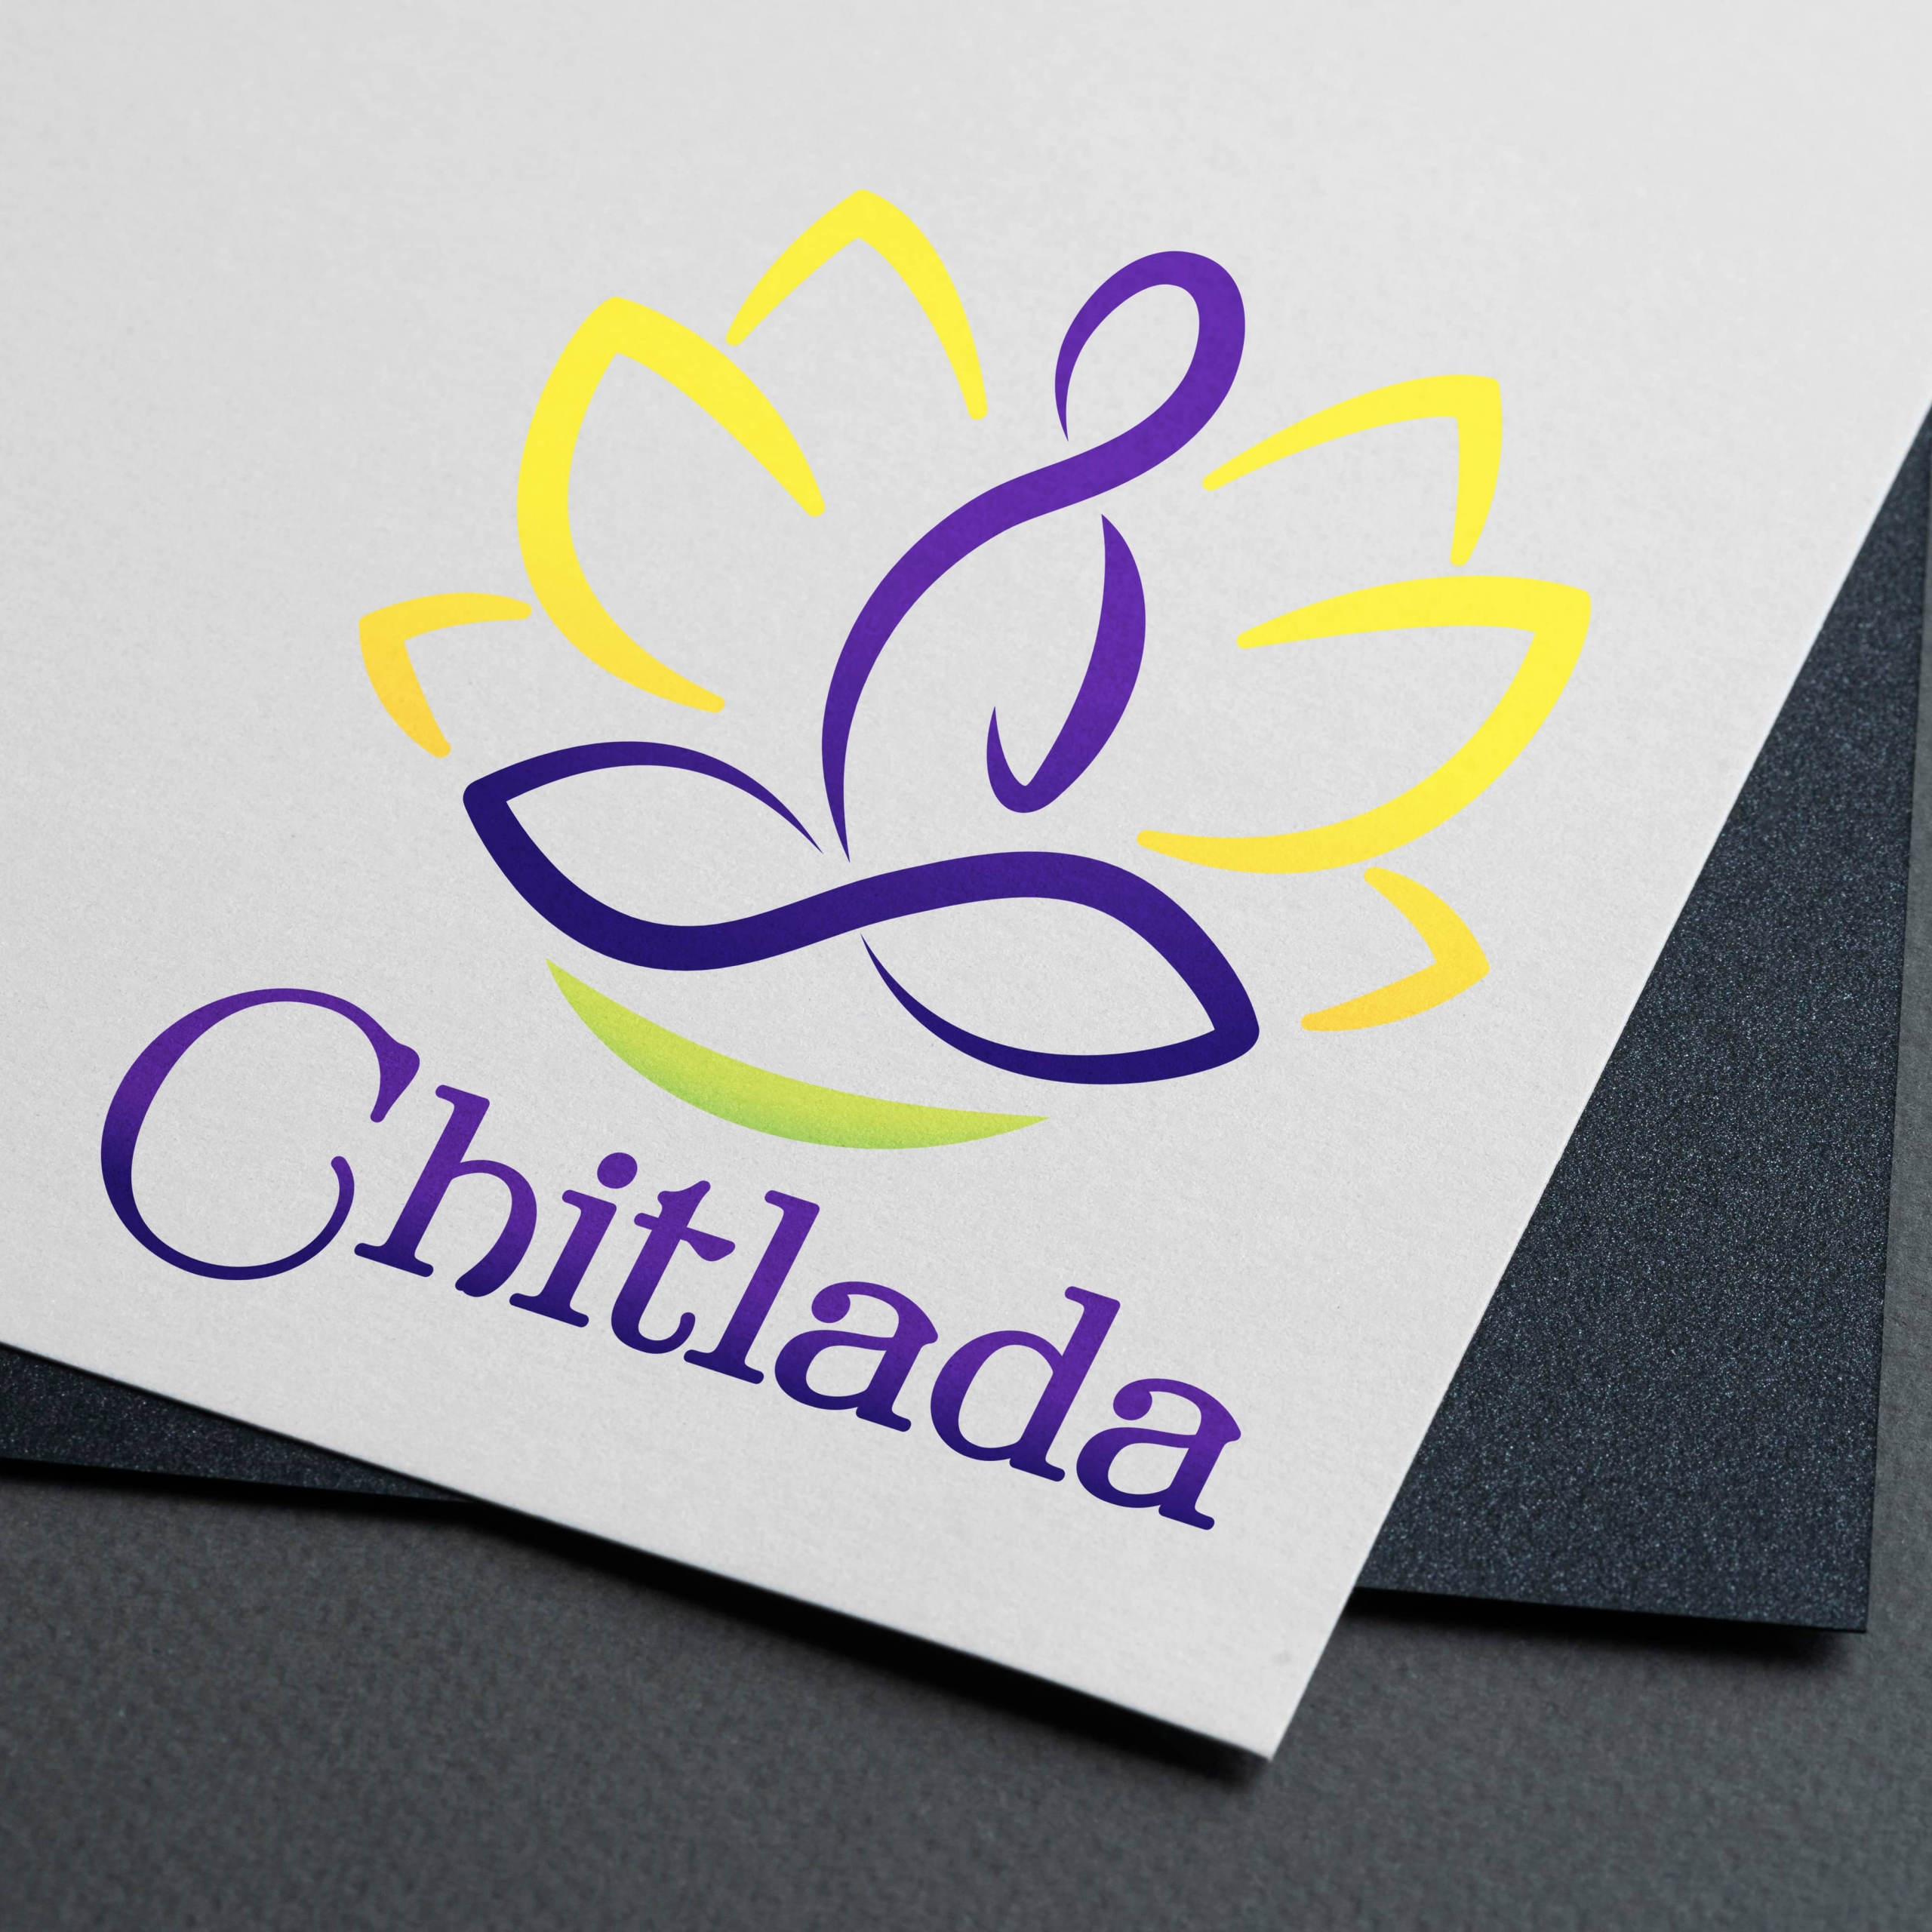 Logo Chitlada - RANA ENCENDIDA - Graphiste - Crépy-en-Valois - Oise